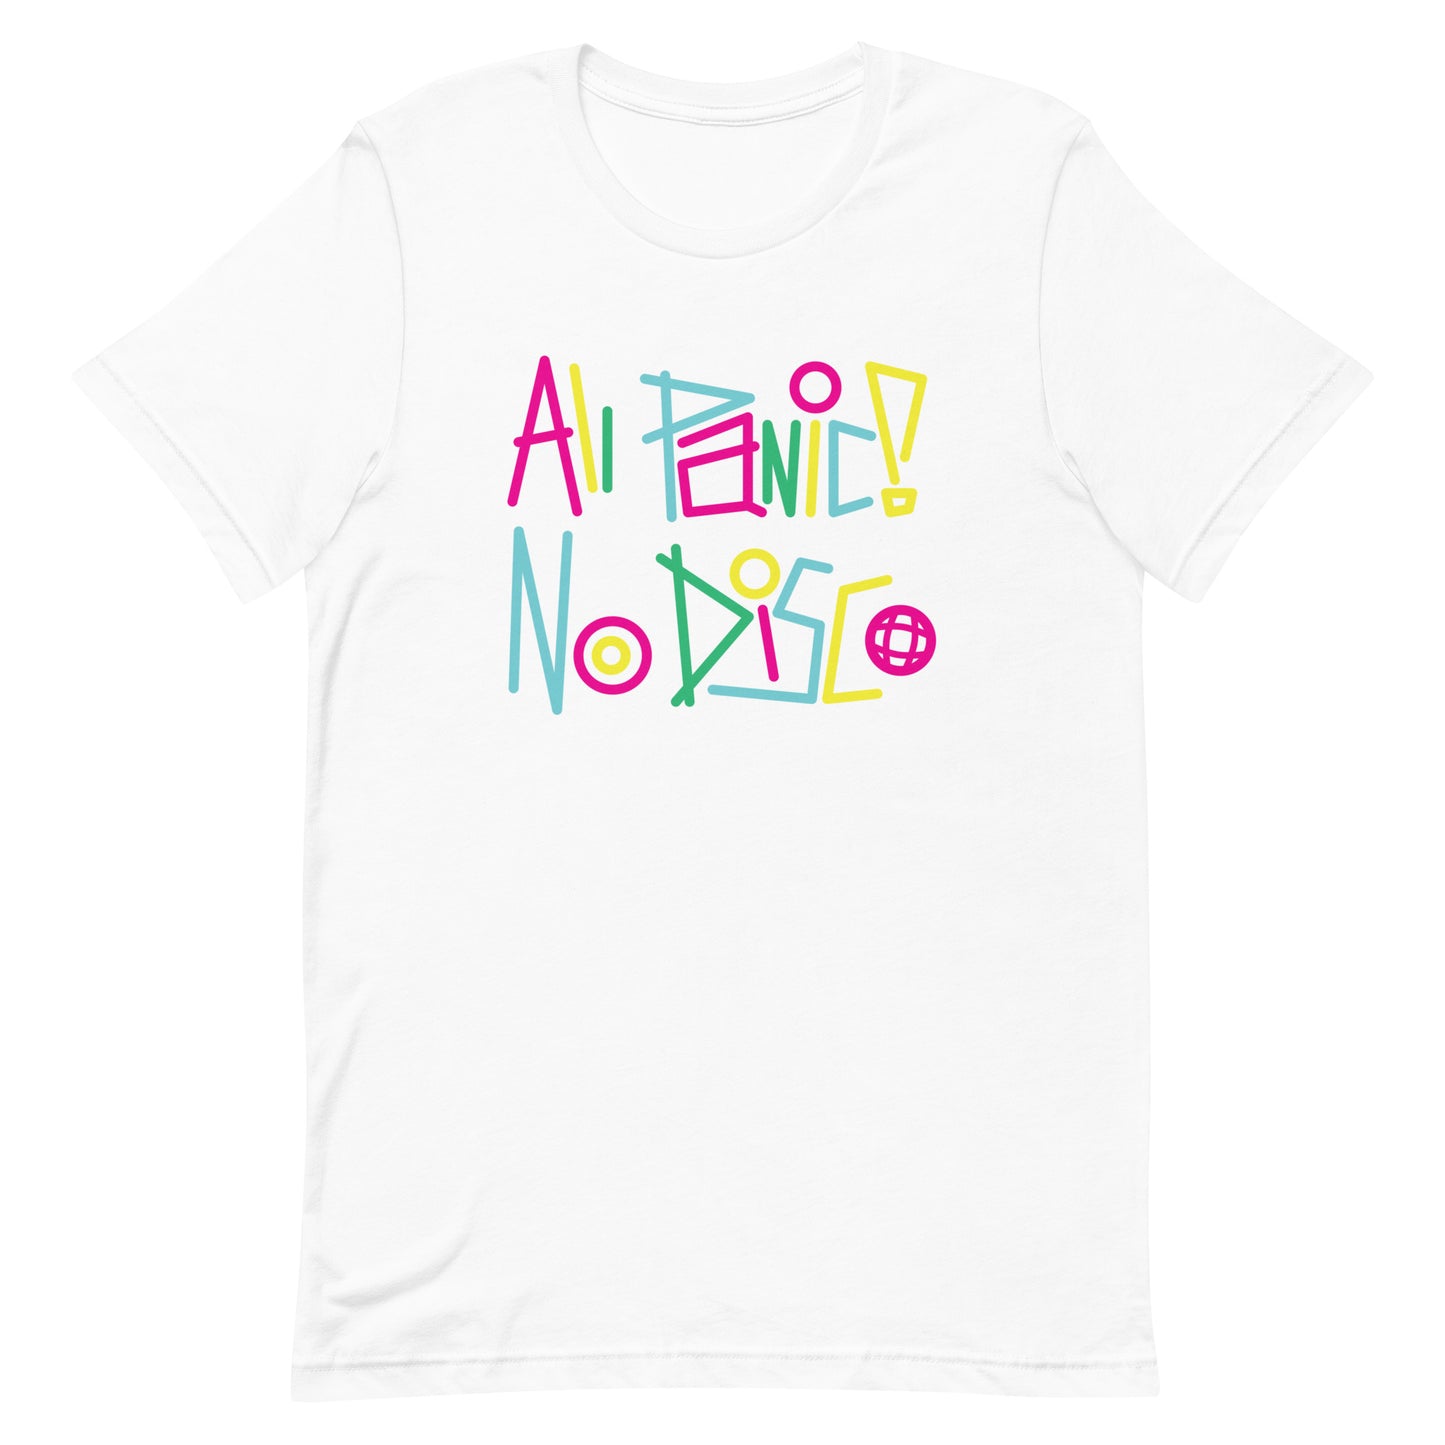 All Panic! No Disco Unisex t-shirt